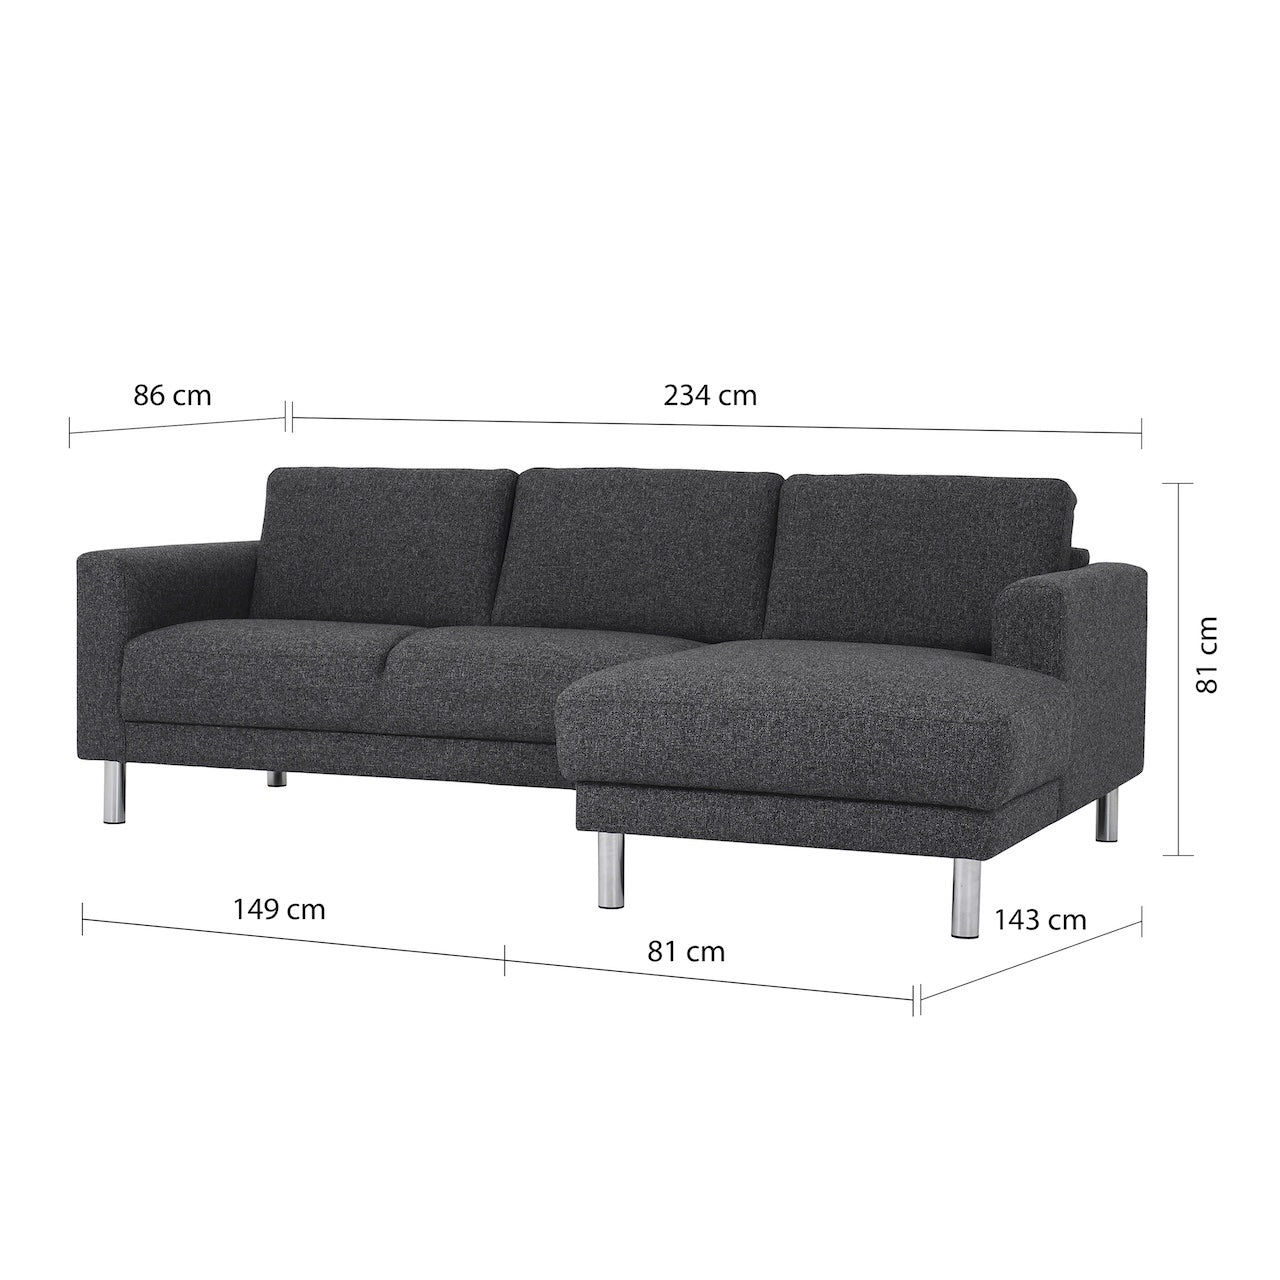 Furniture To Go Cleveland Chaiselongue Sofa (RH) in Nova Anthracite